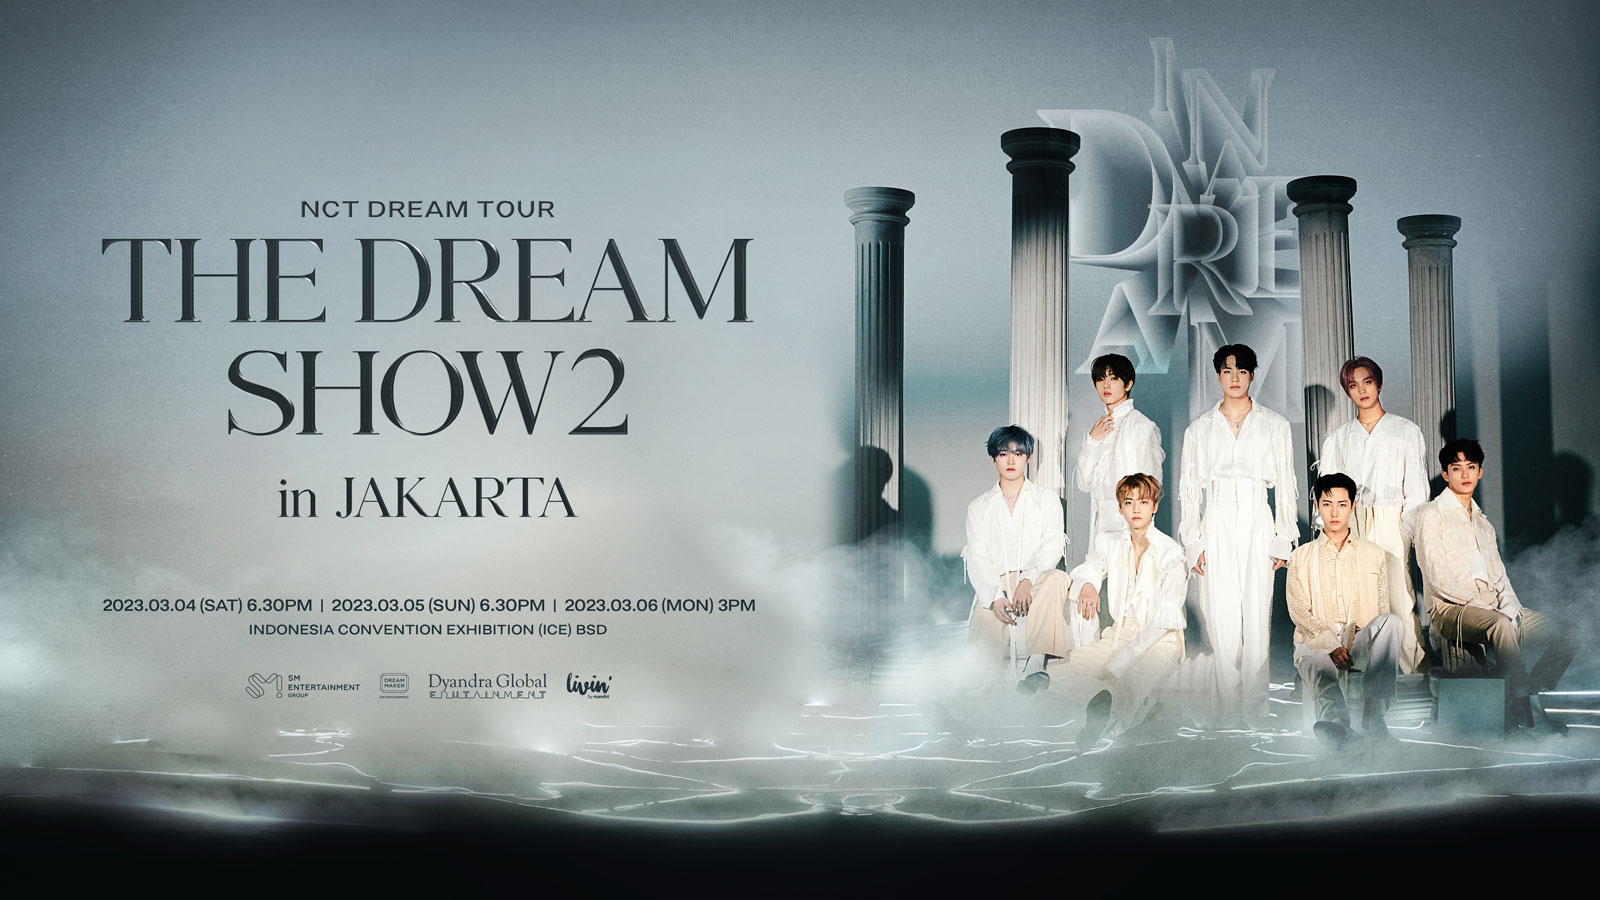 NCT DREAM TOUR ‘THE DREAM SHOW2 : In A DREAM’ in JAKARTA